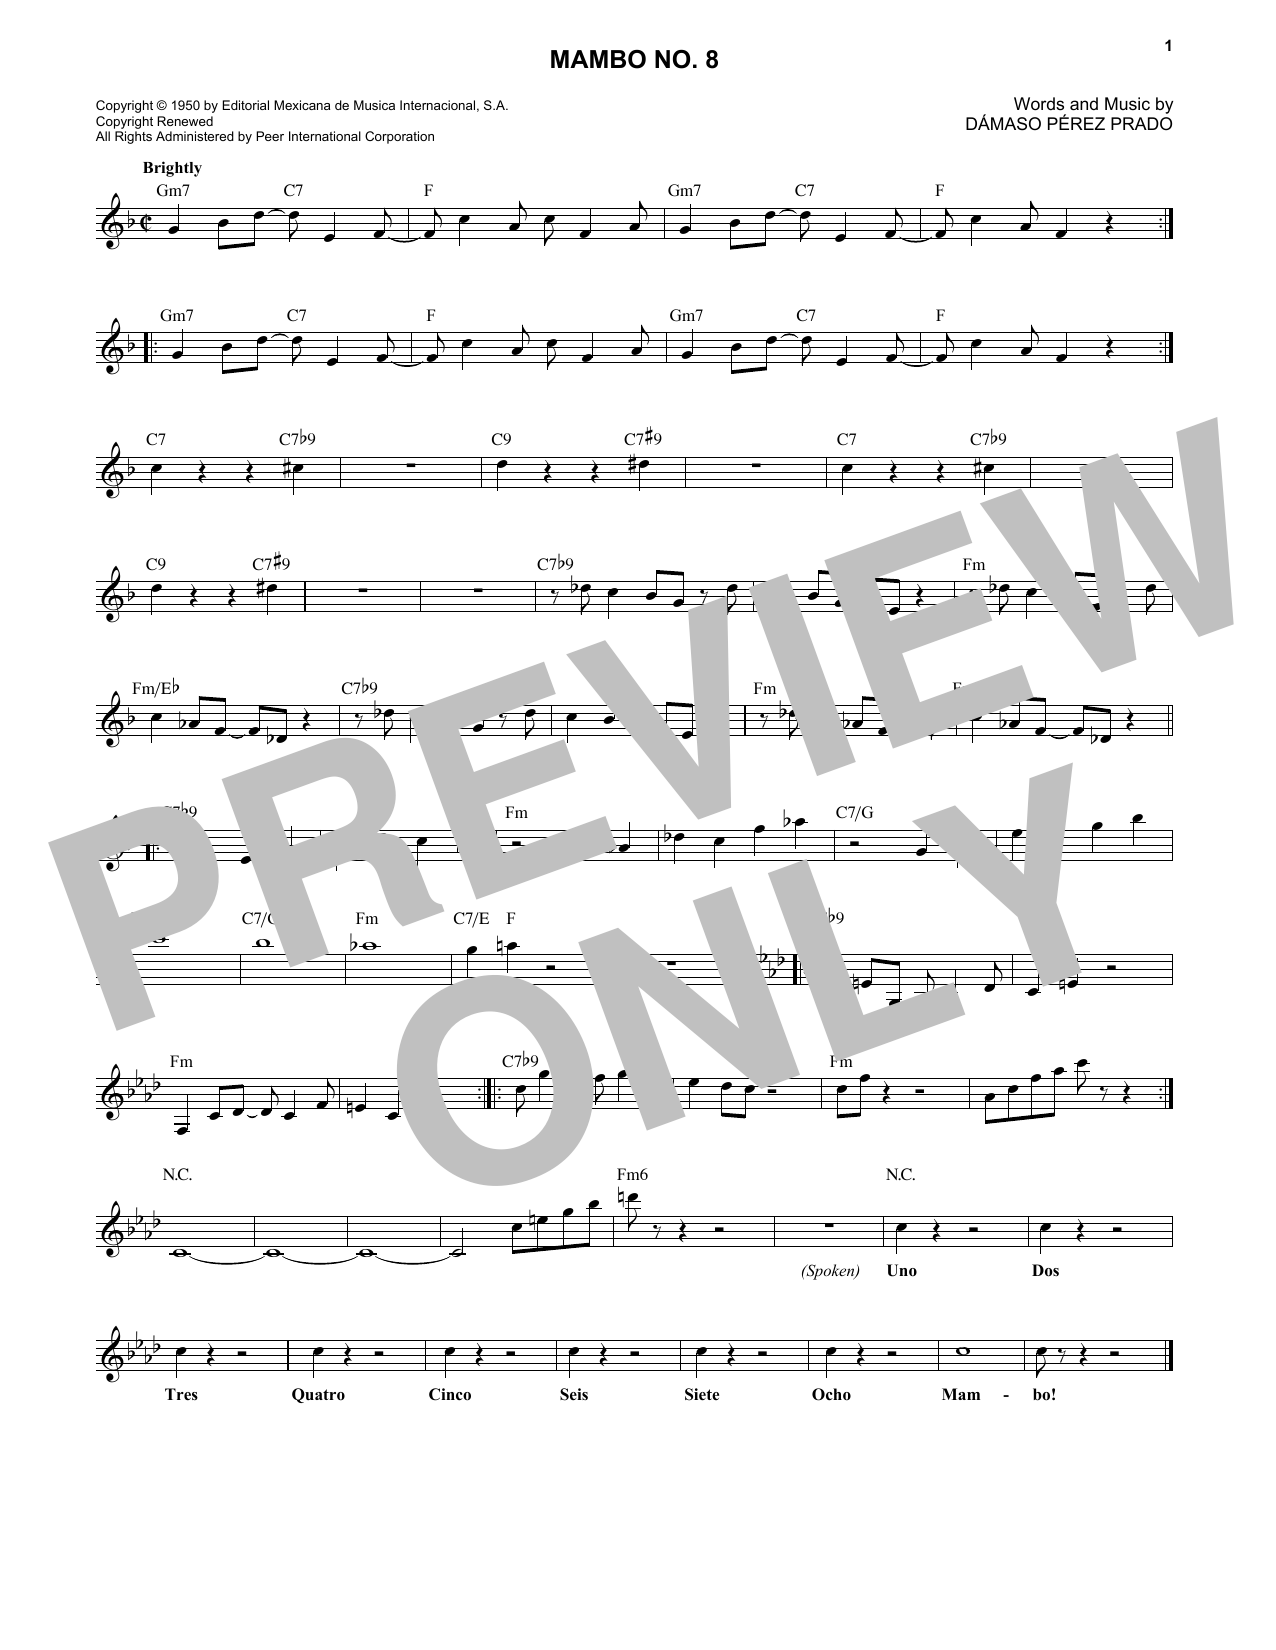 Mario Bauzá Mambo #8 Sheet Music Notes & Chords for Real Book – Melody & Chords - Download or Print PDF